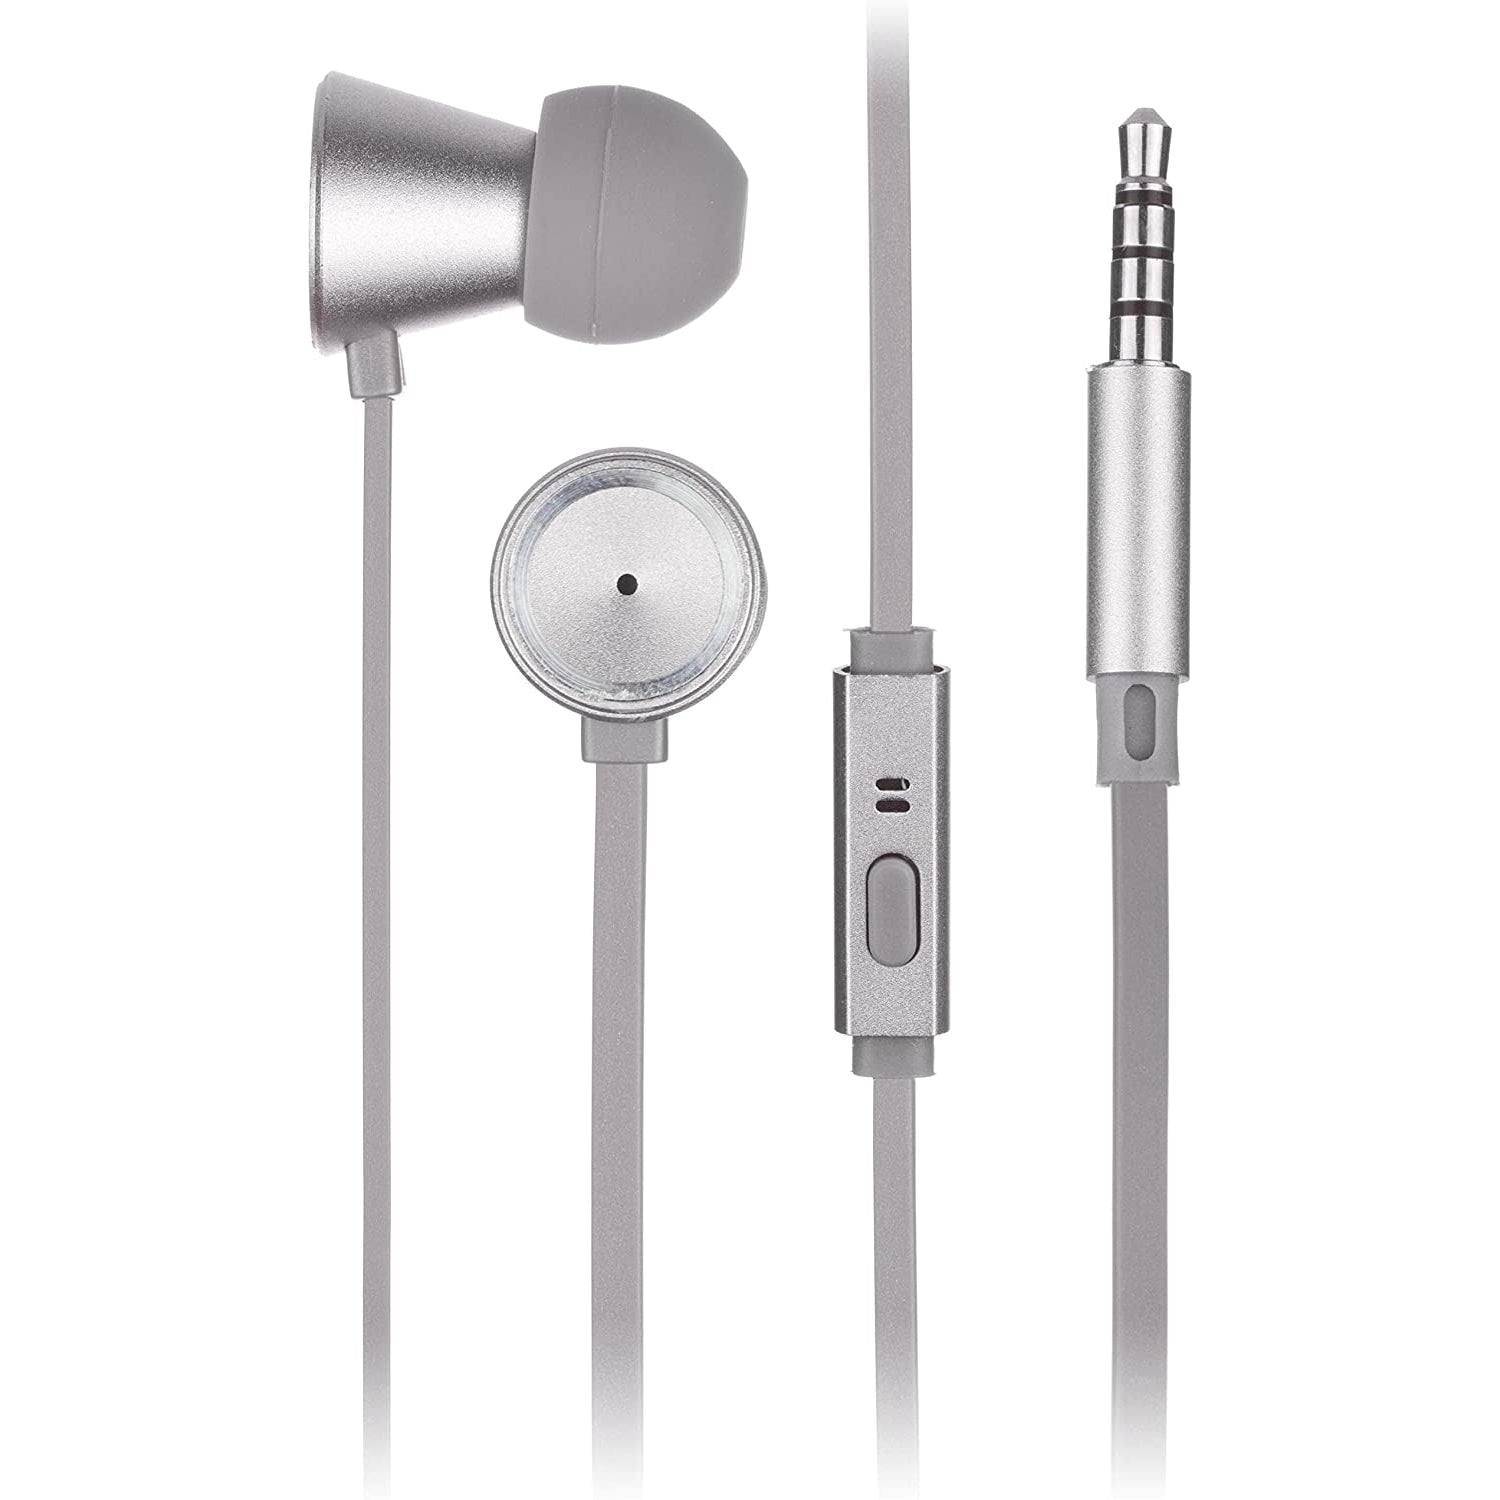 KitSound Metallics In-Ear Headphone for Smartphones and Tablets, Gun Metal